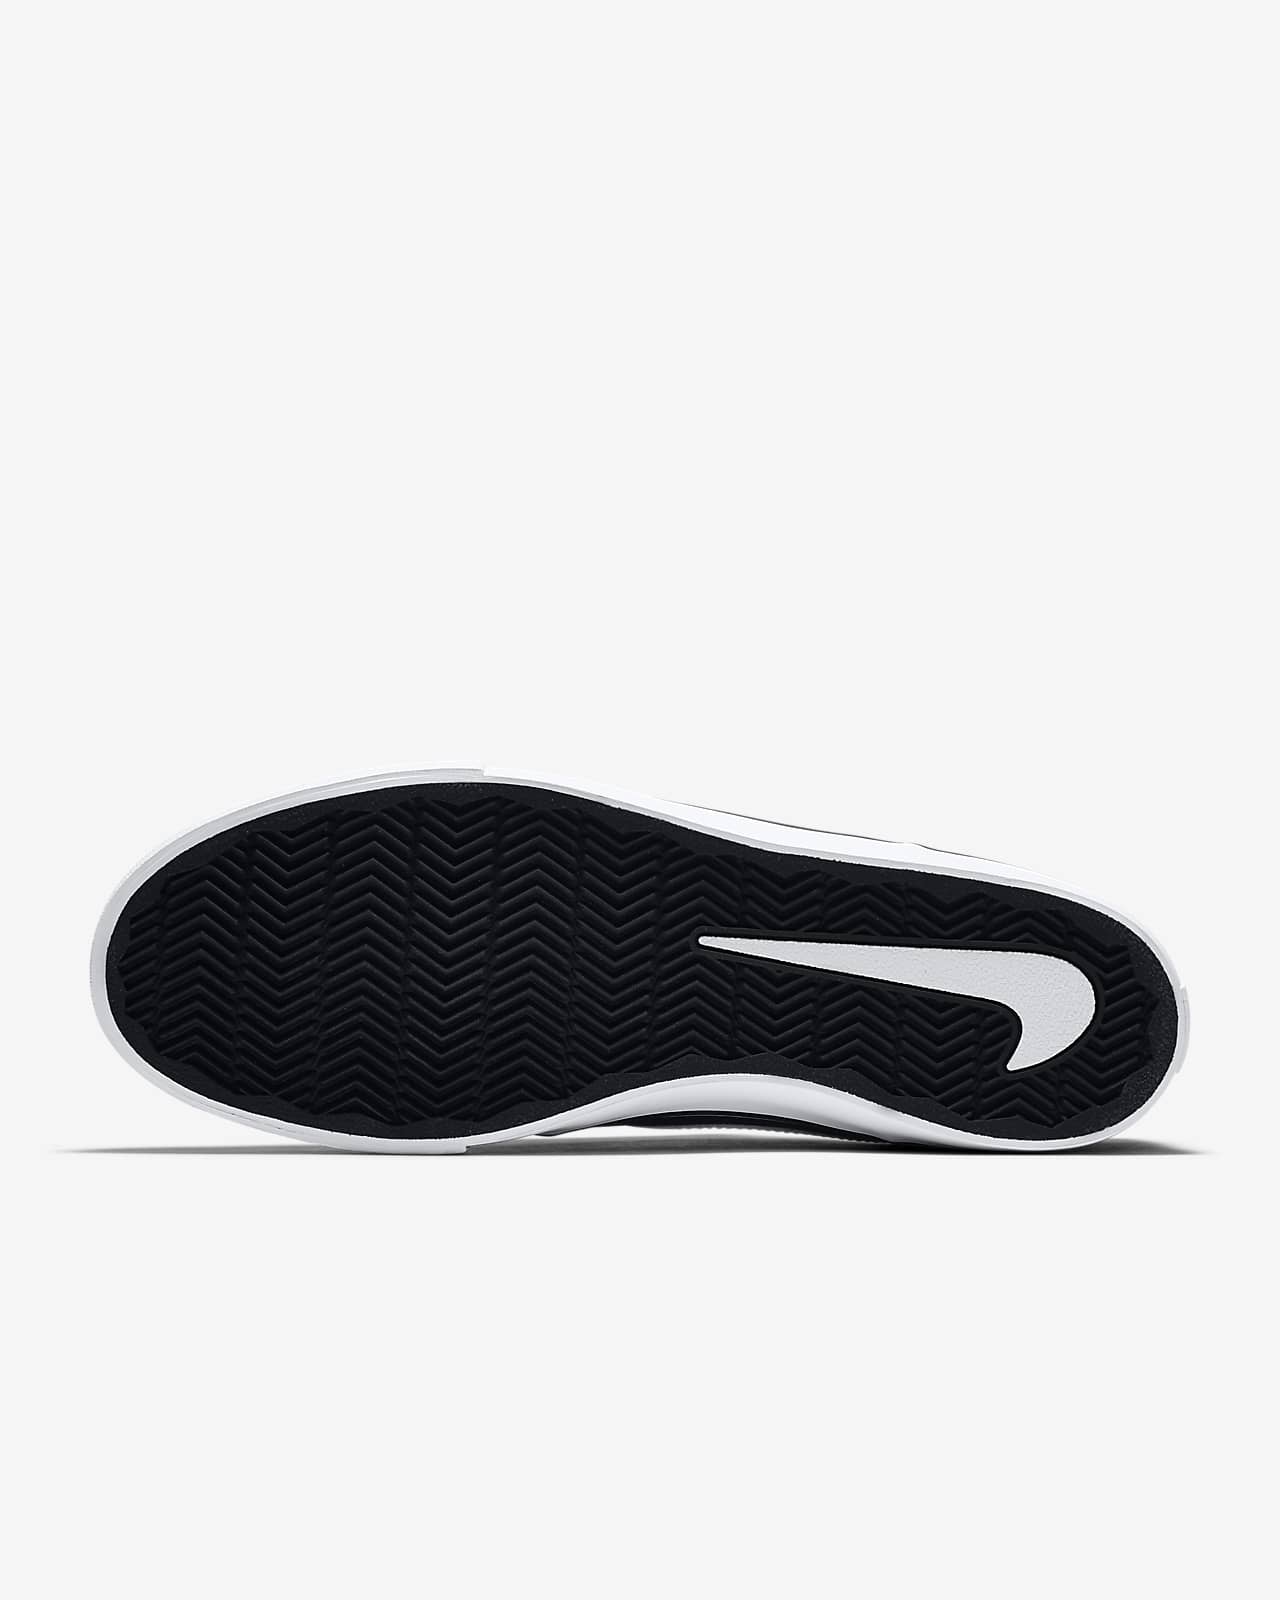 Nike SB Solarsoft 2 Skate Shoes.